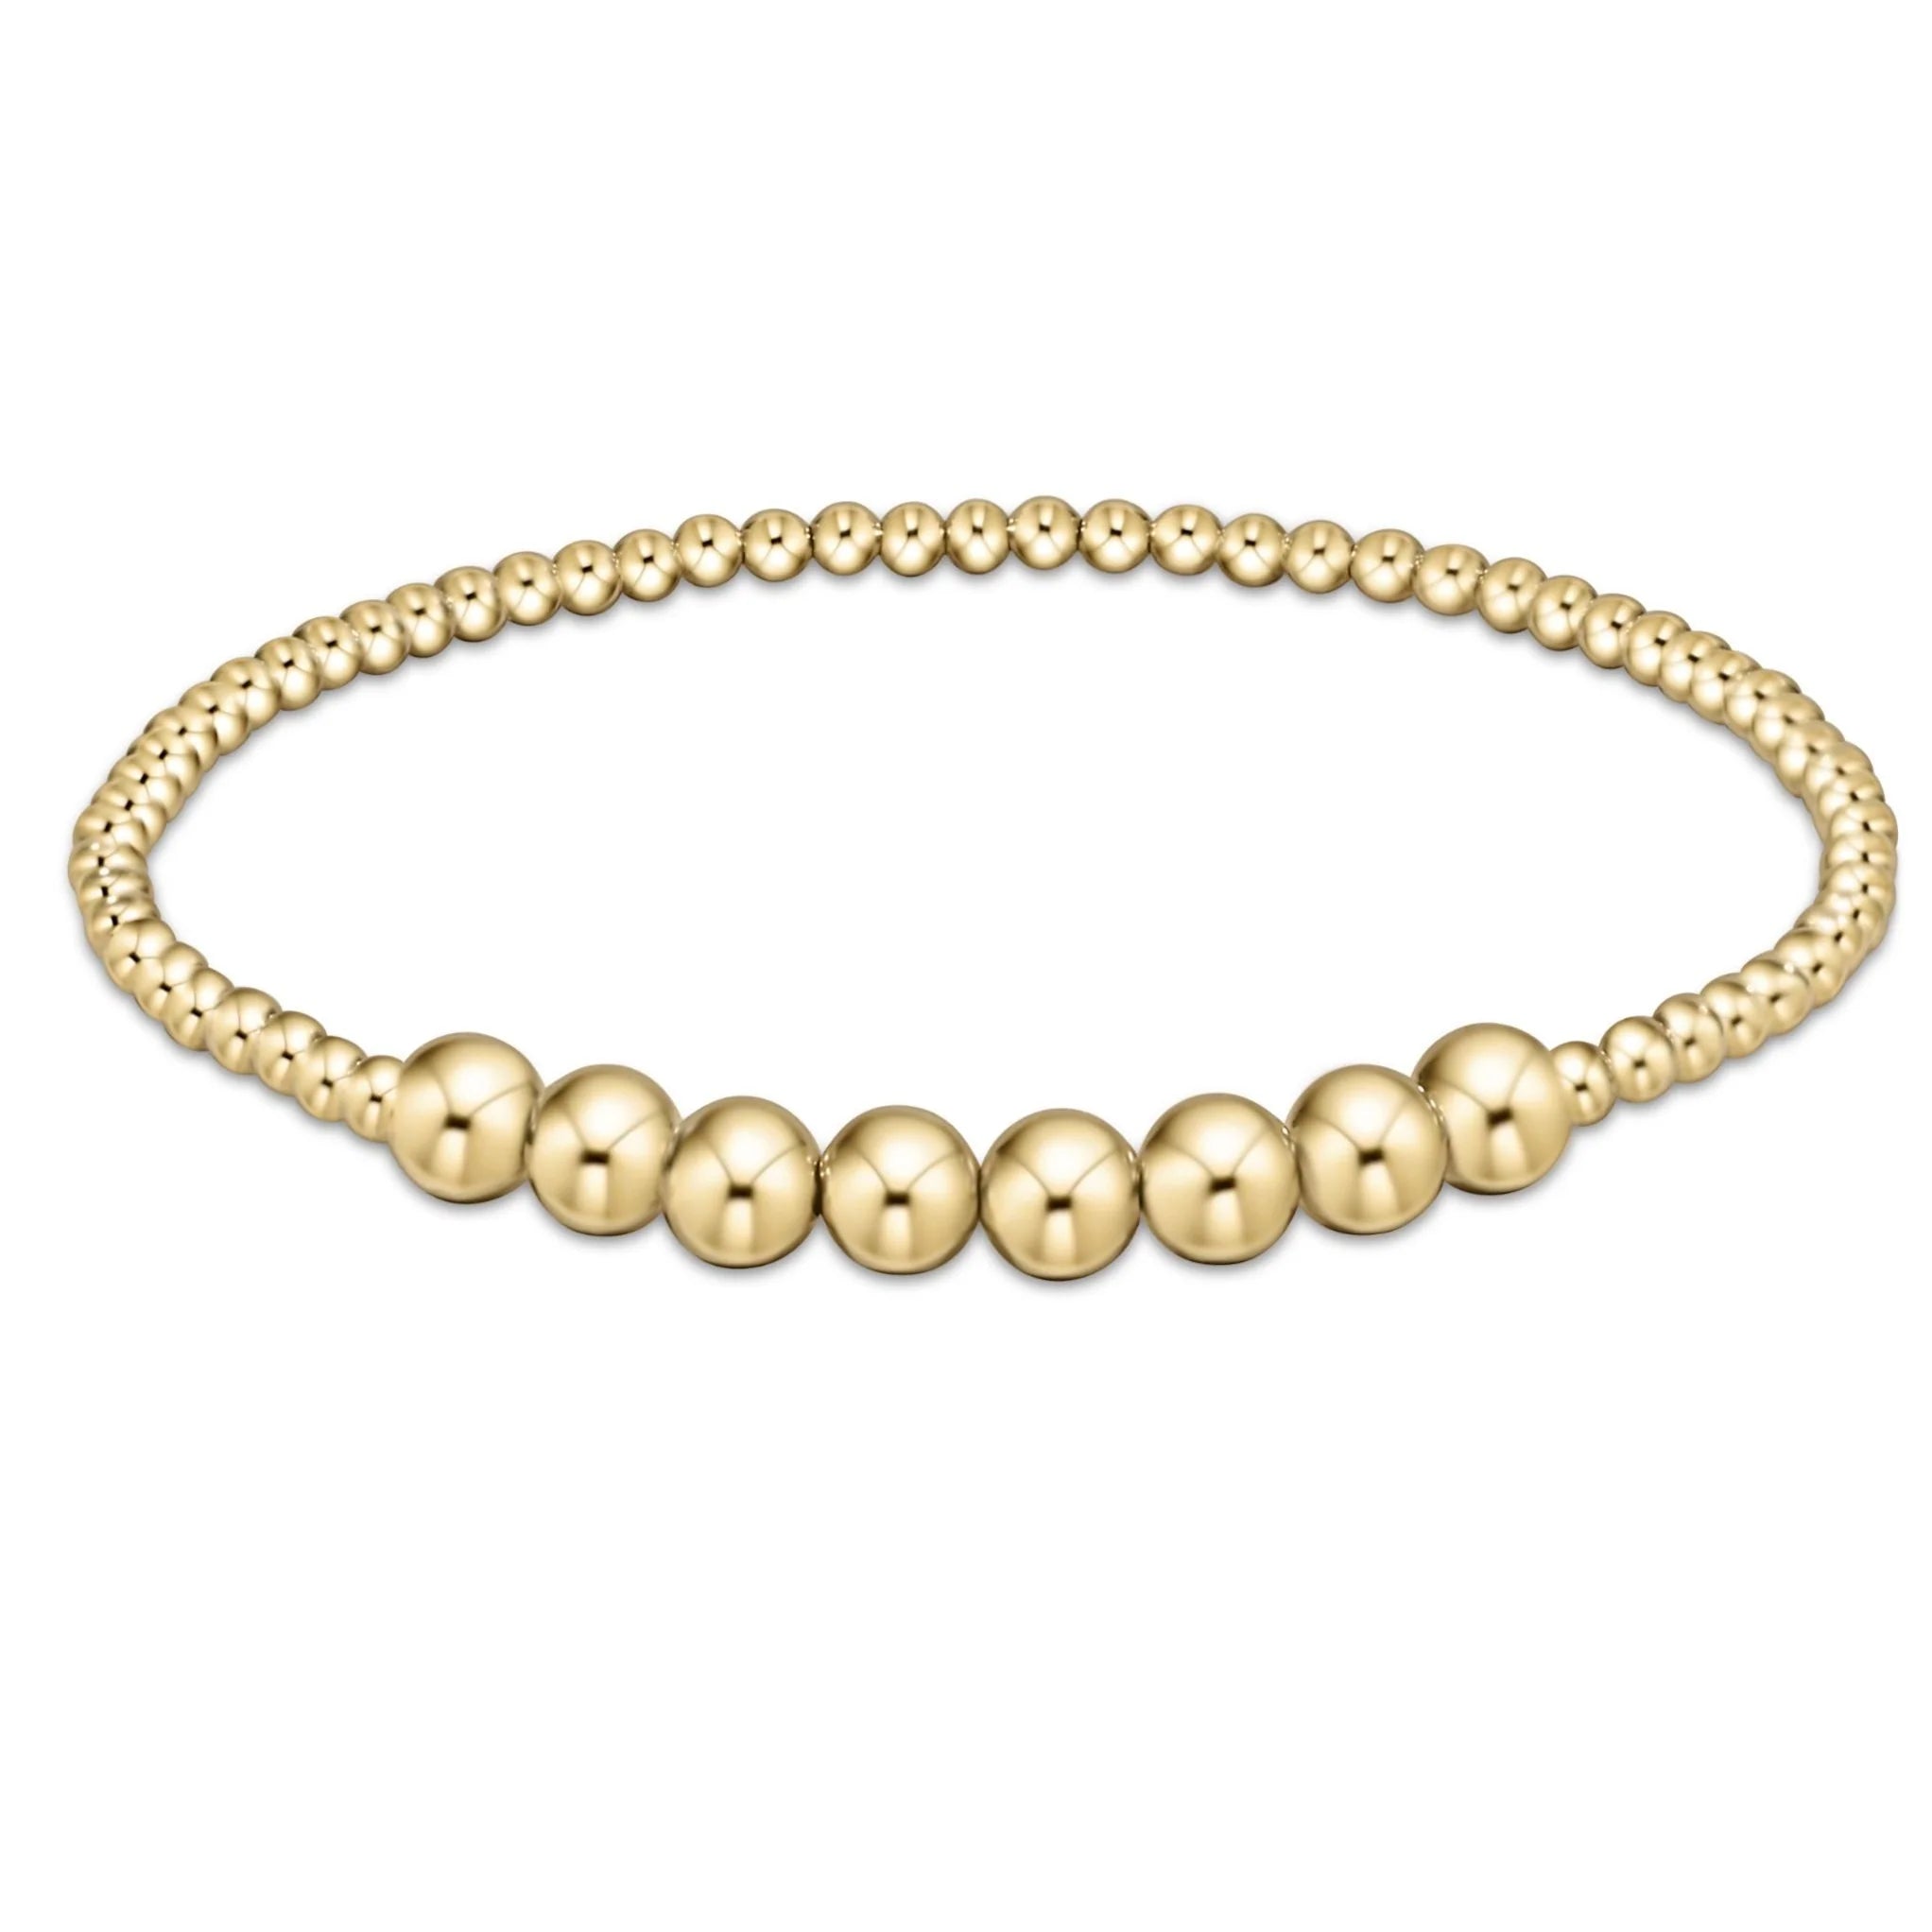 E-Newton 2 sizes of Gold Beads Bracelet